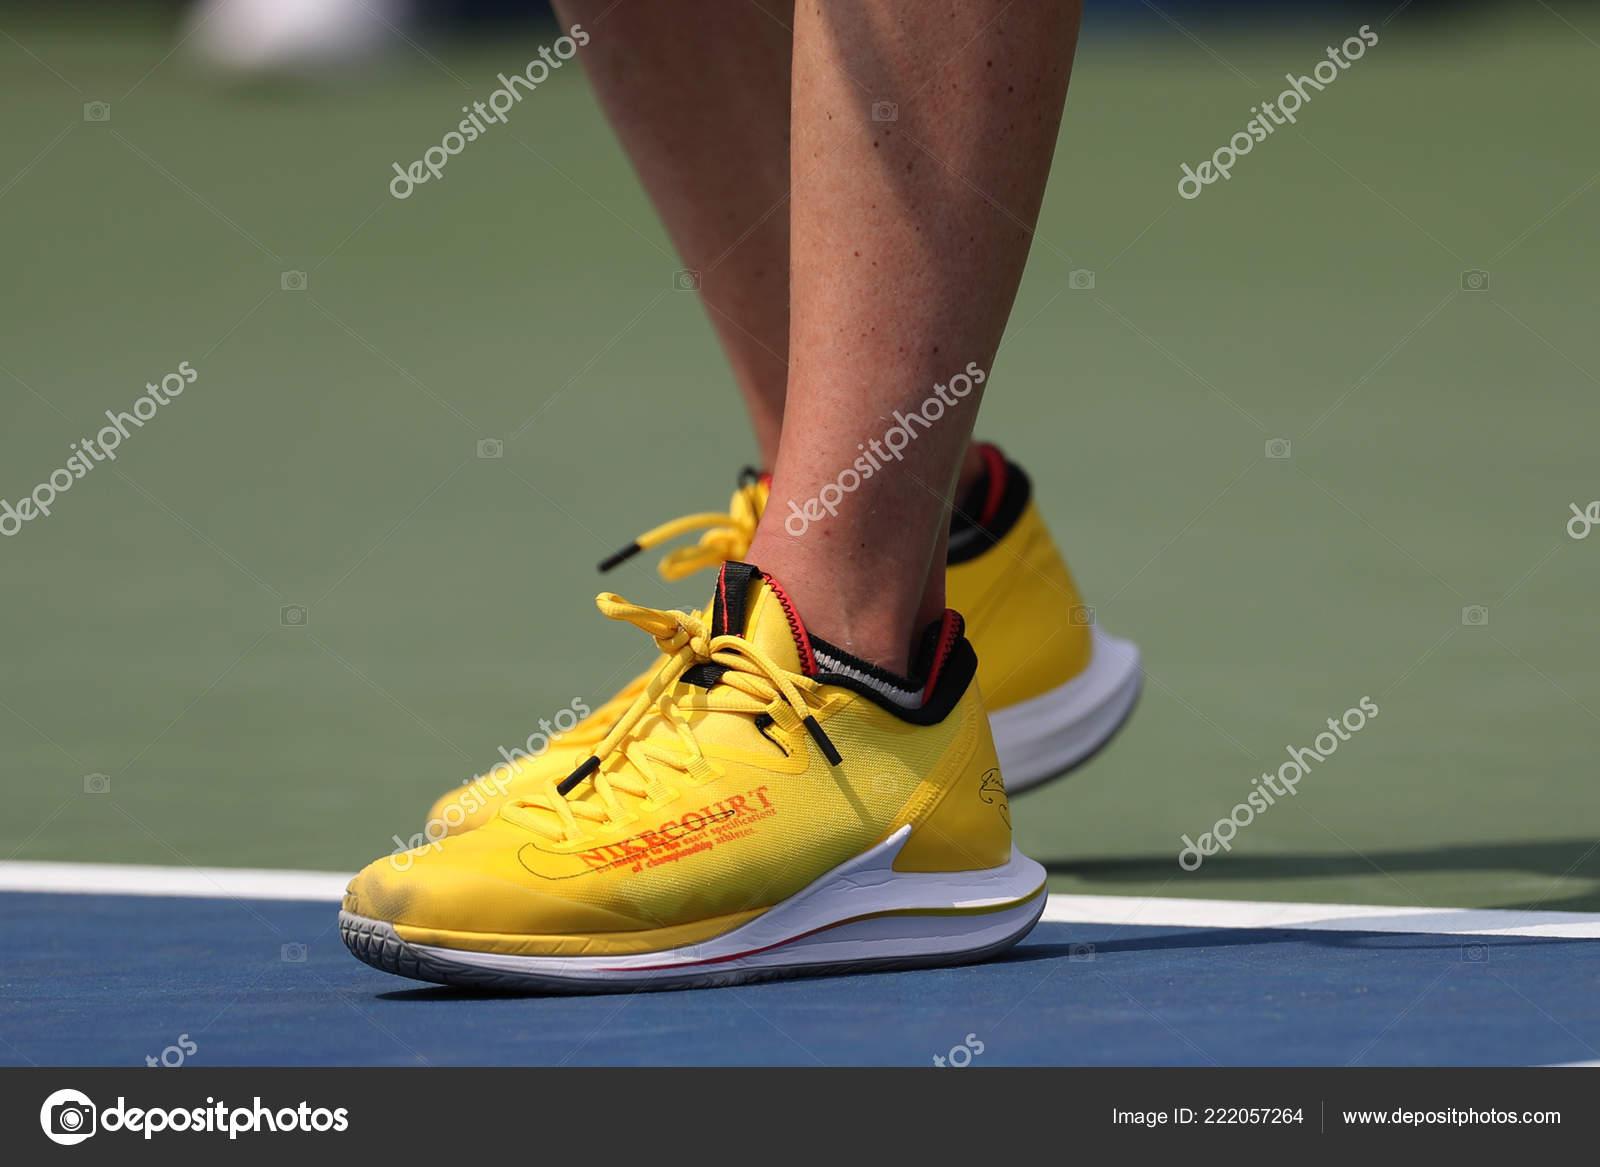 customize nike tennis shoes